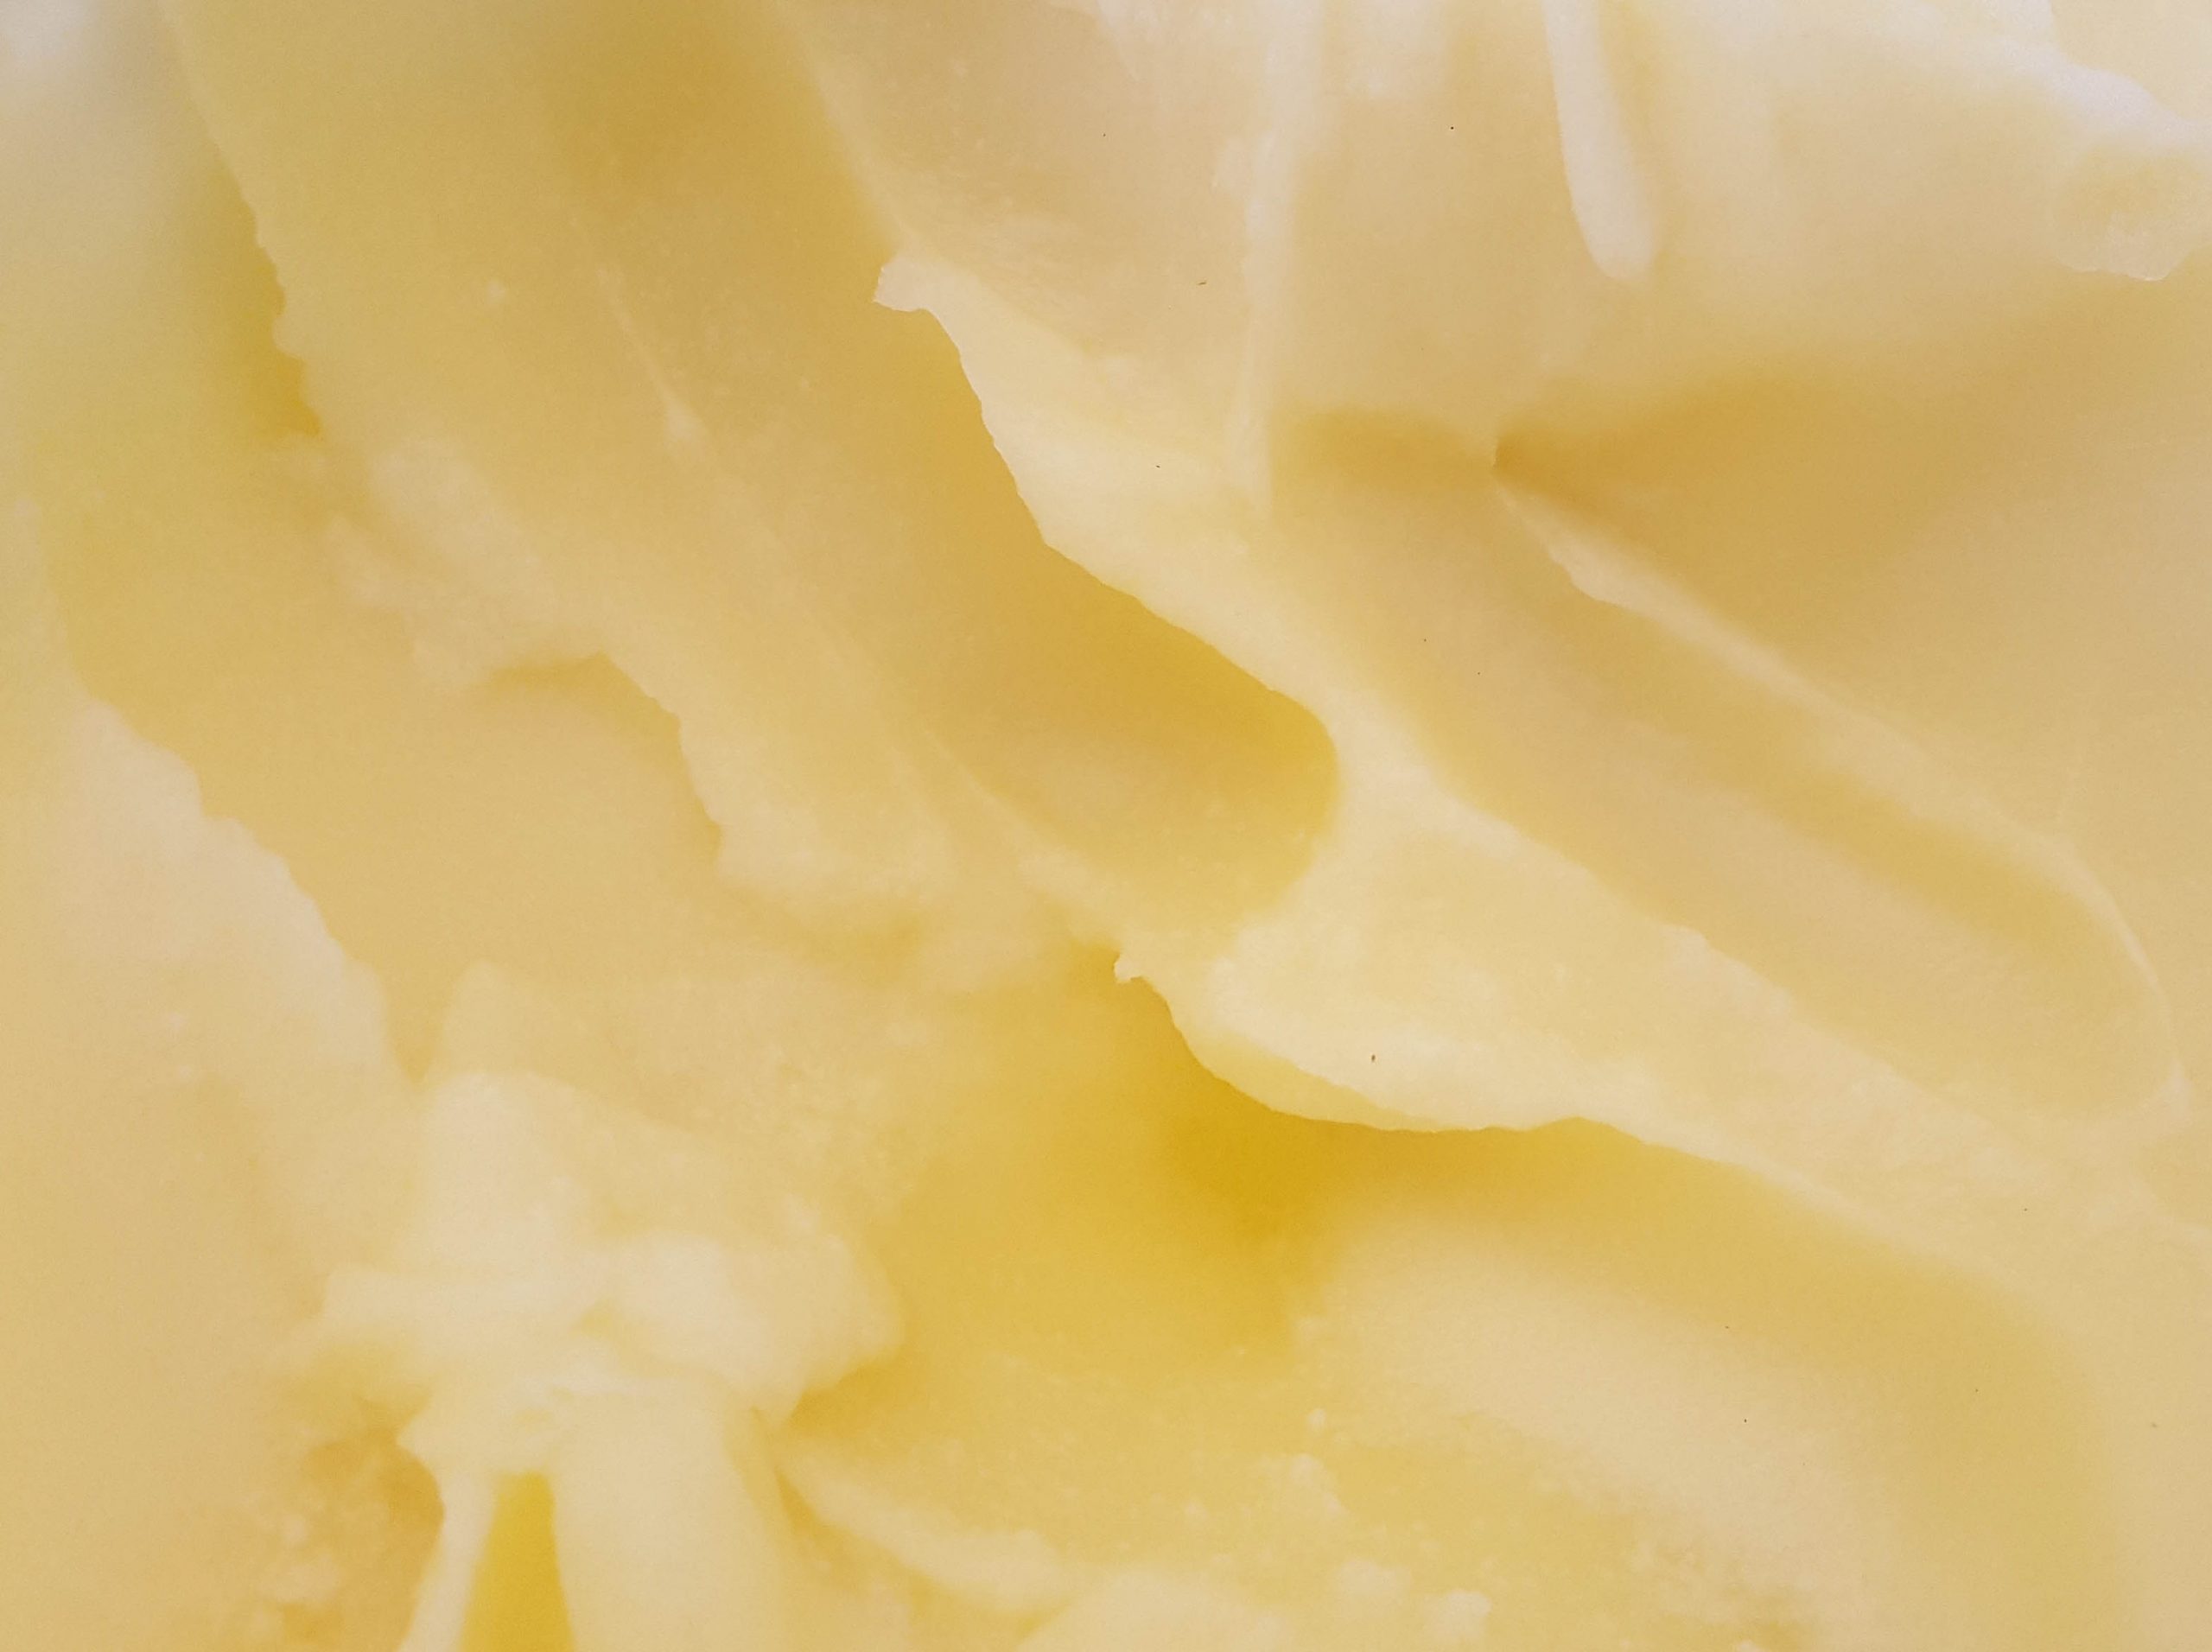 Nilotica shea butter close-up | Caïo